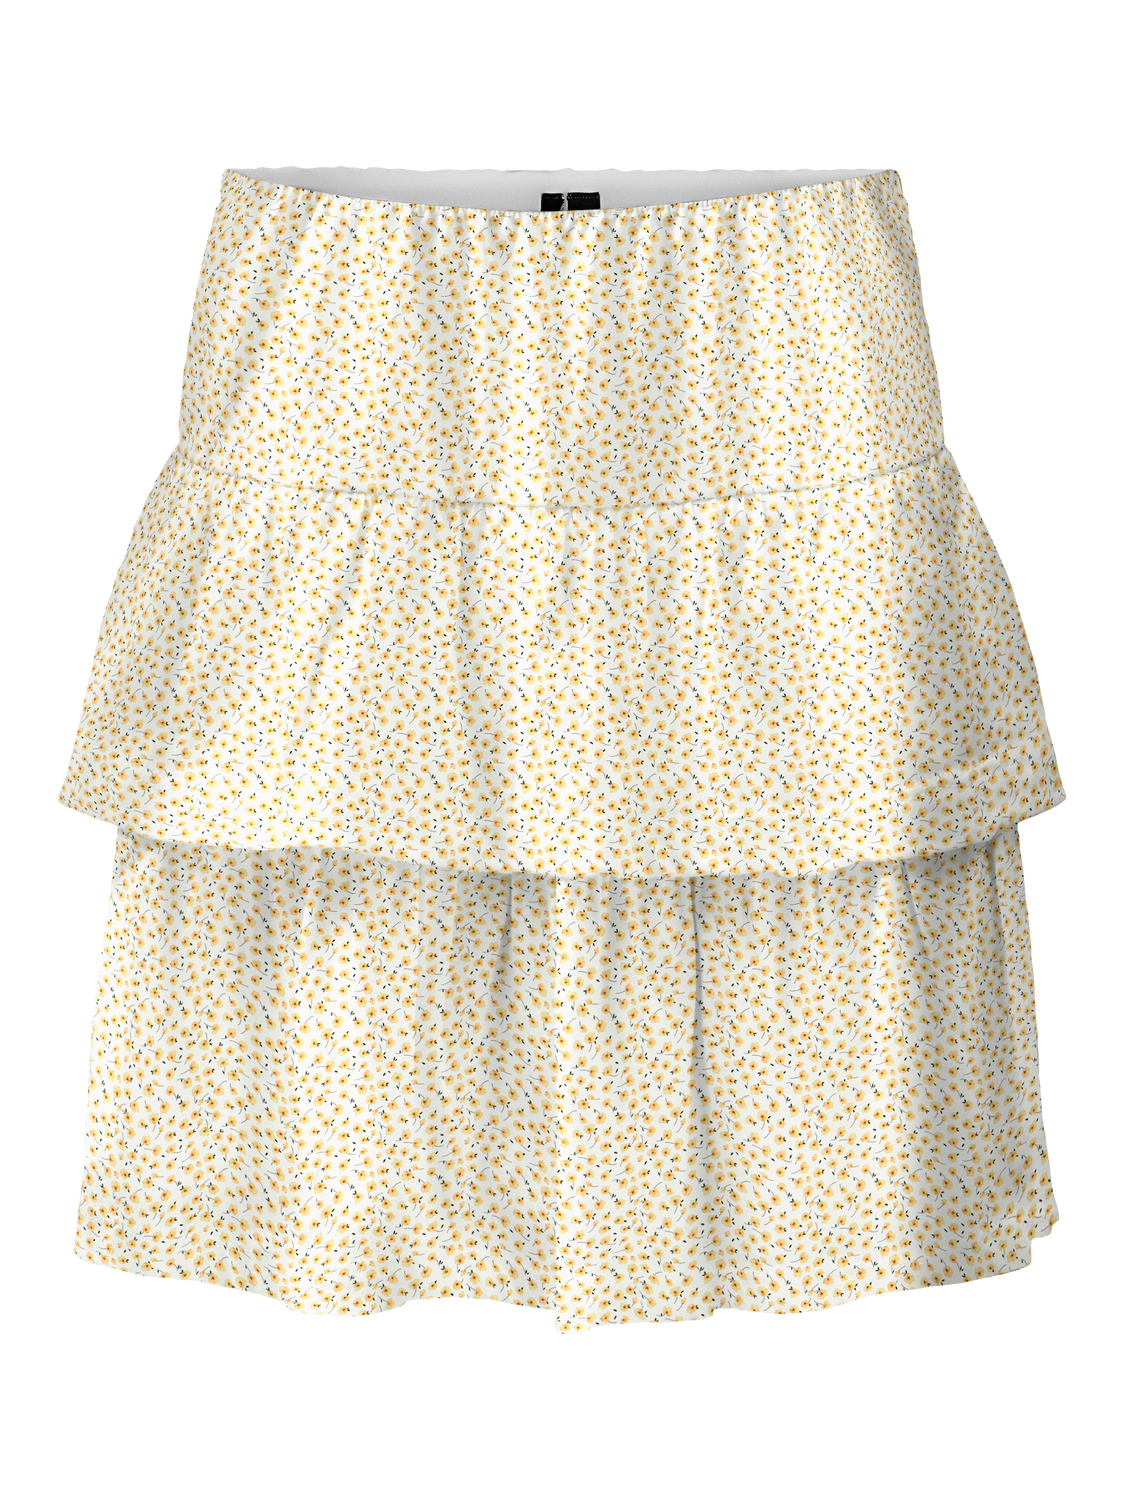 VMSMILLA Skirt - Snow White & yellow